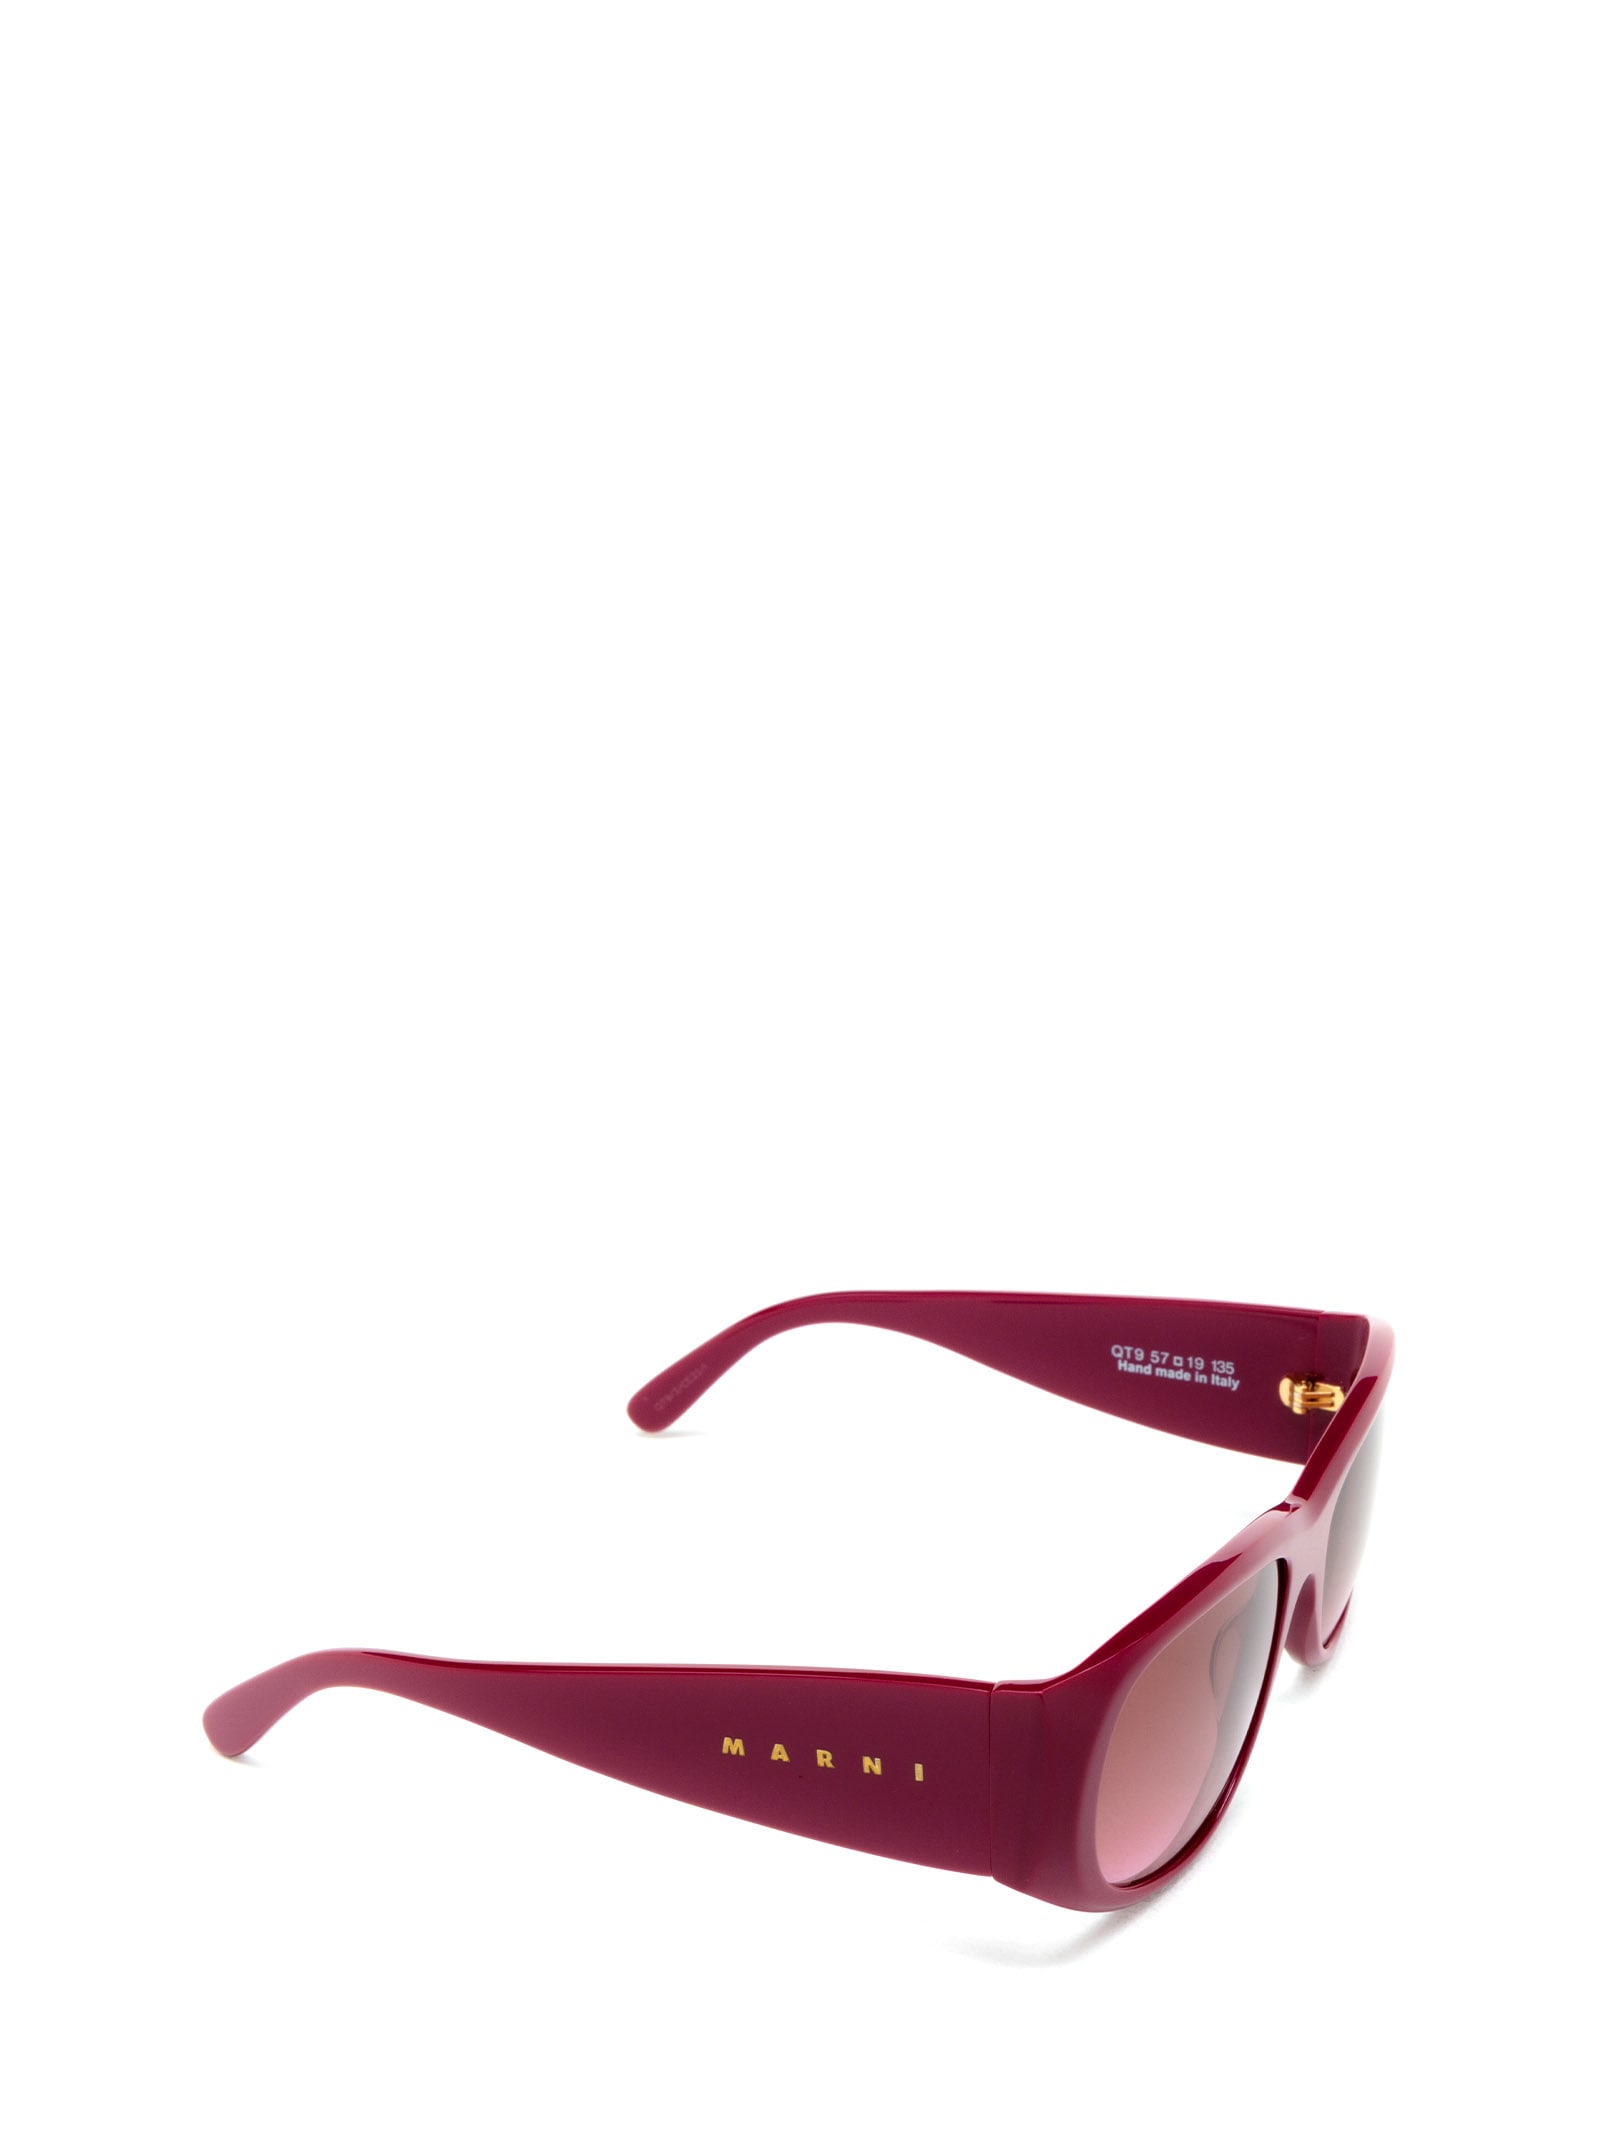 Shop Marni Eyewear Orinoco River Bordeaux Sunglasses